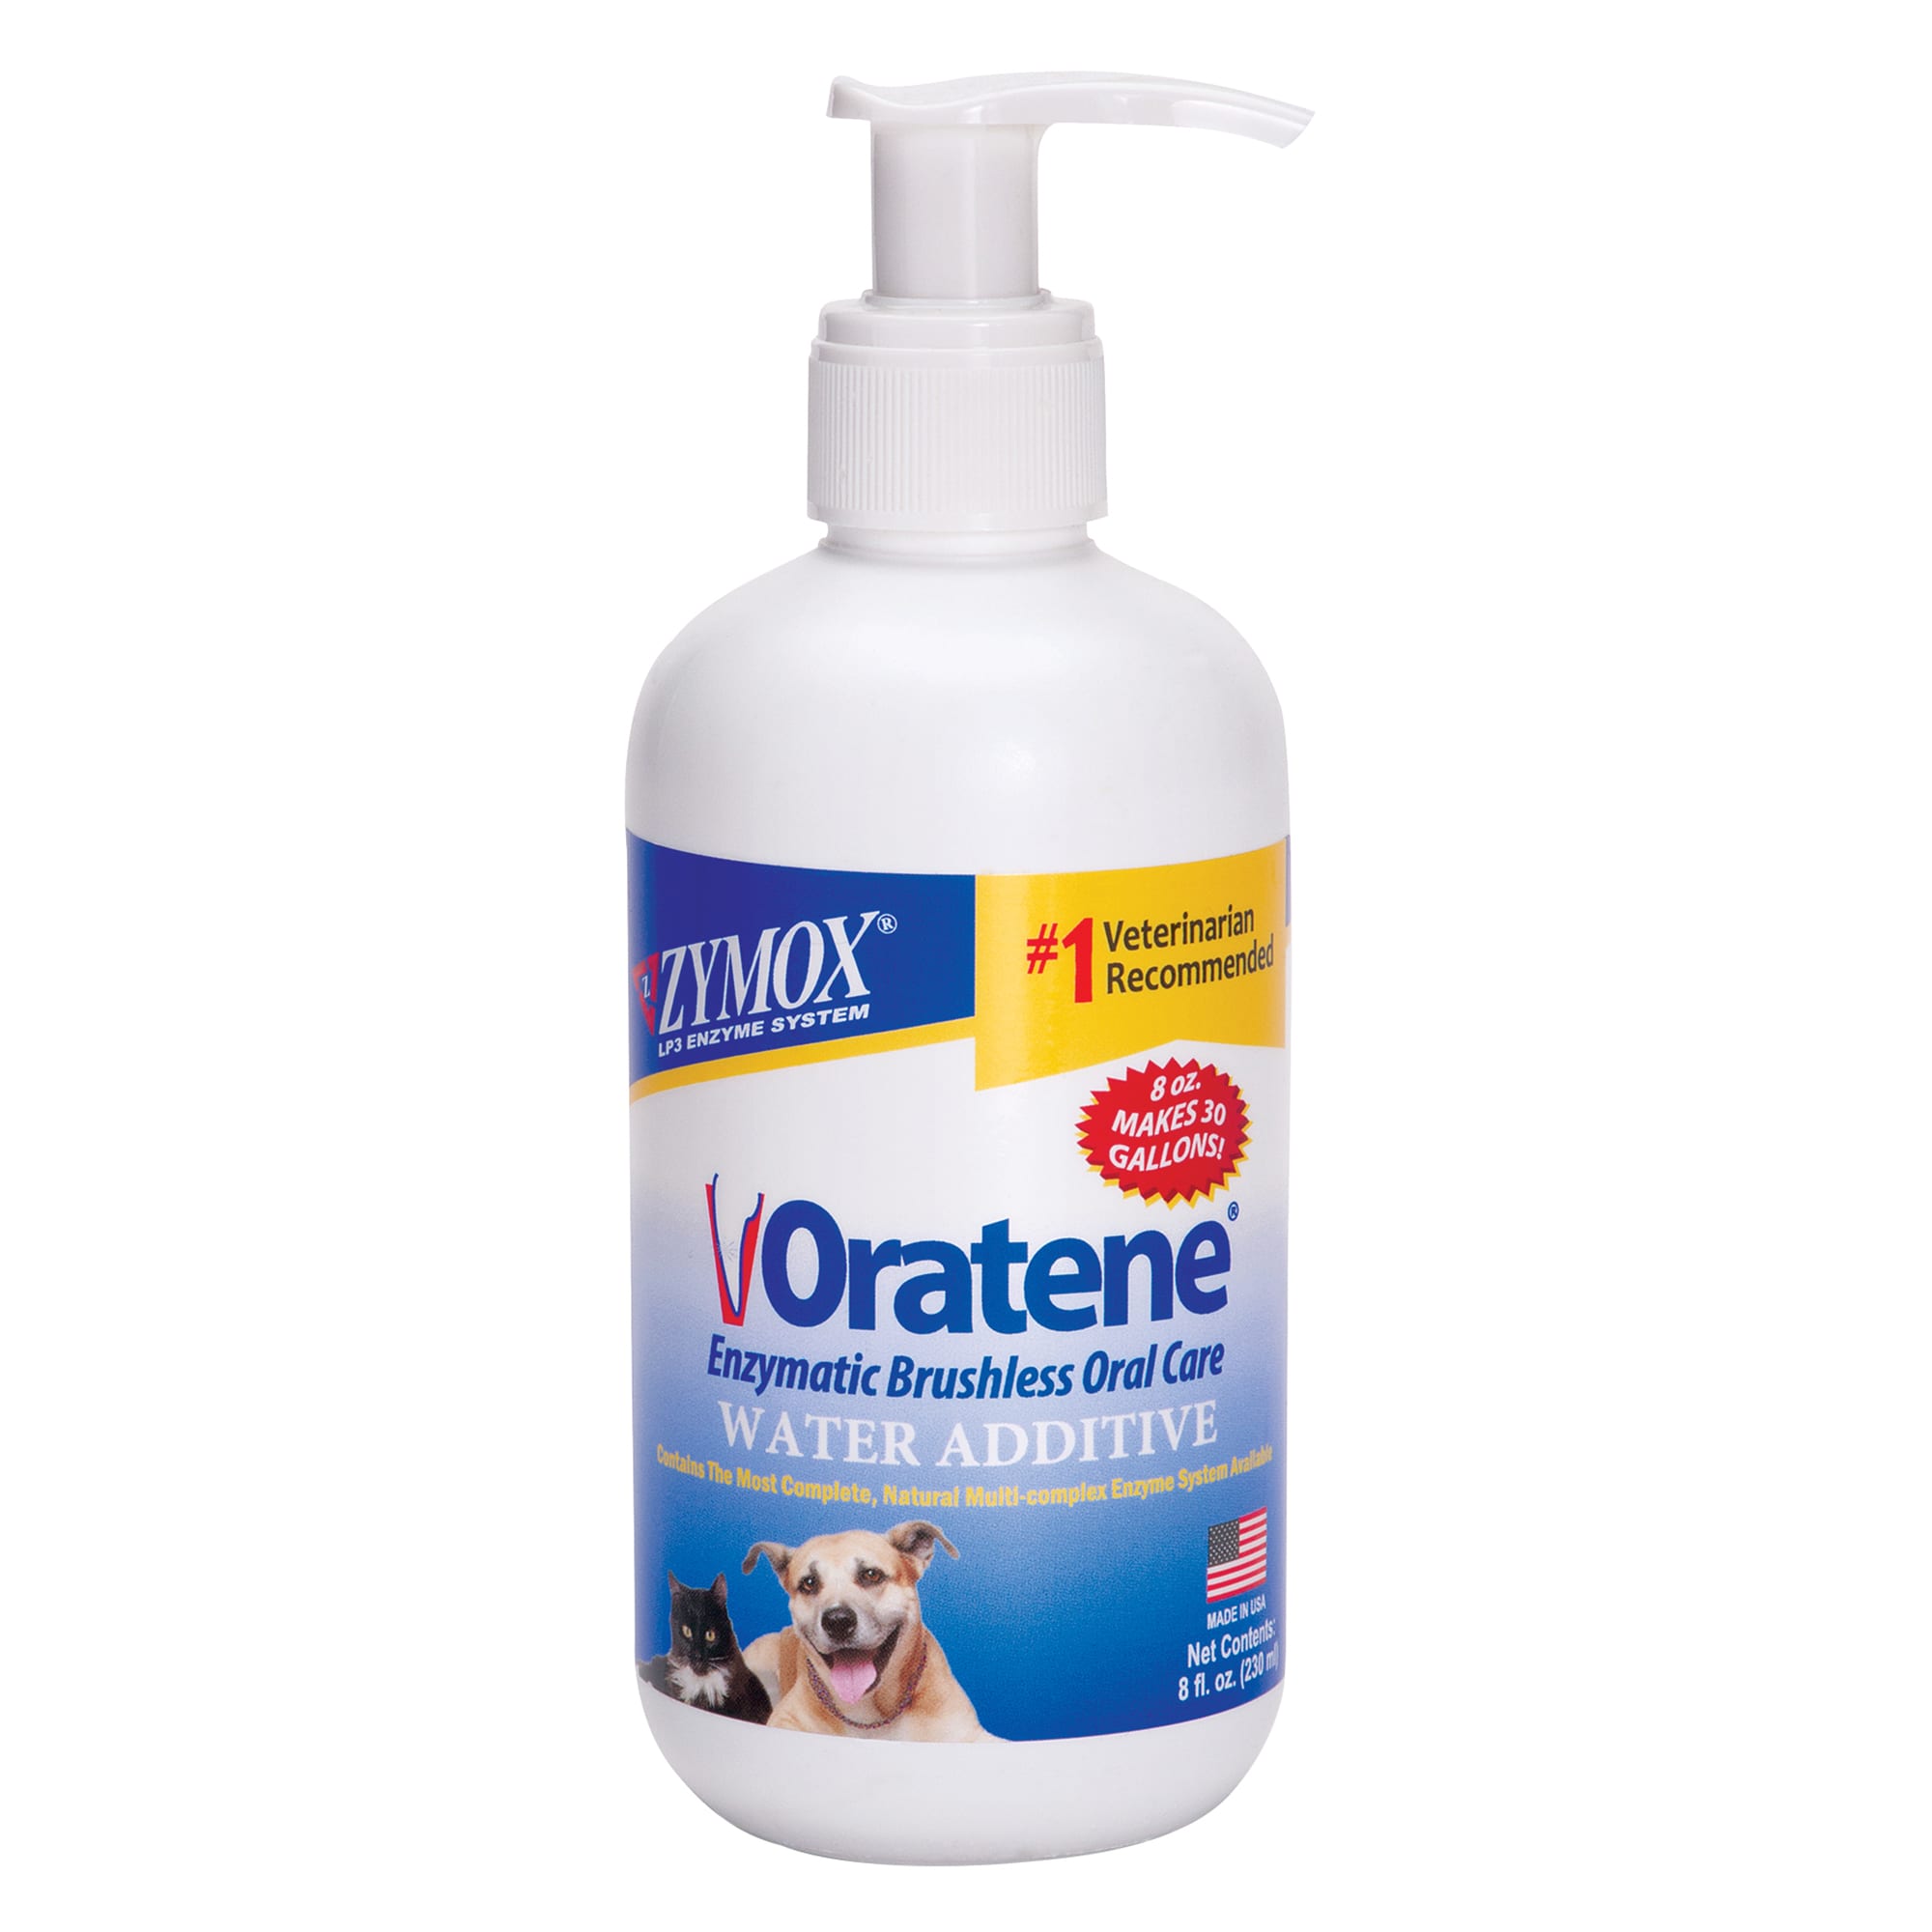 Zymox Oratene Water Additive, 8 oz. | Petco